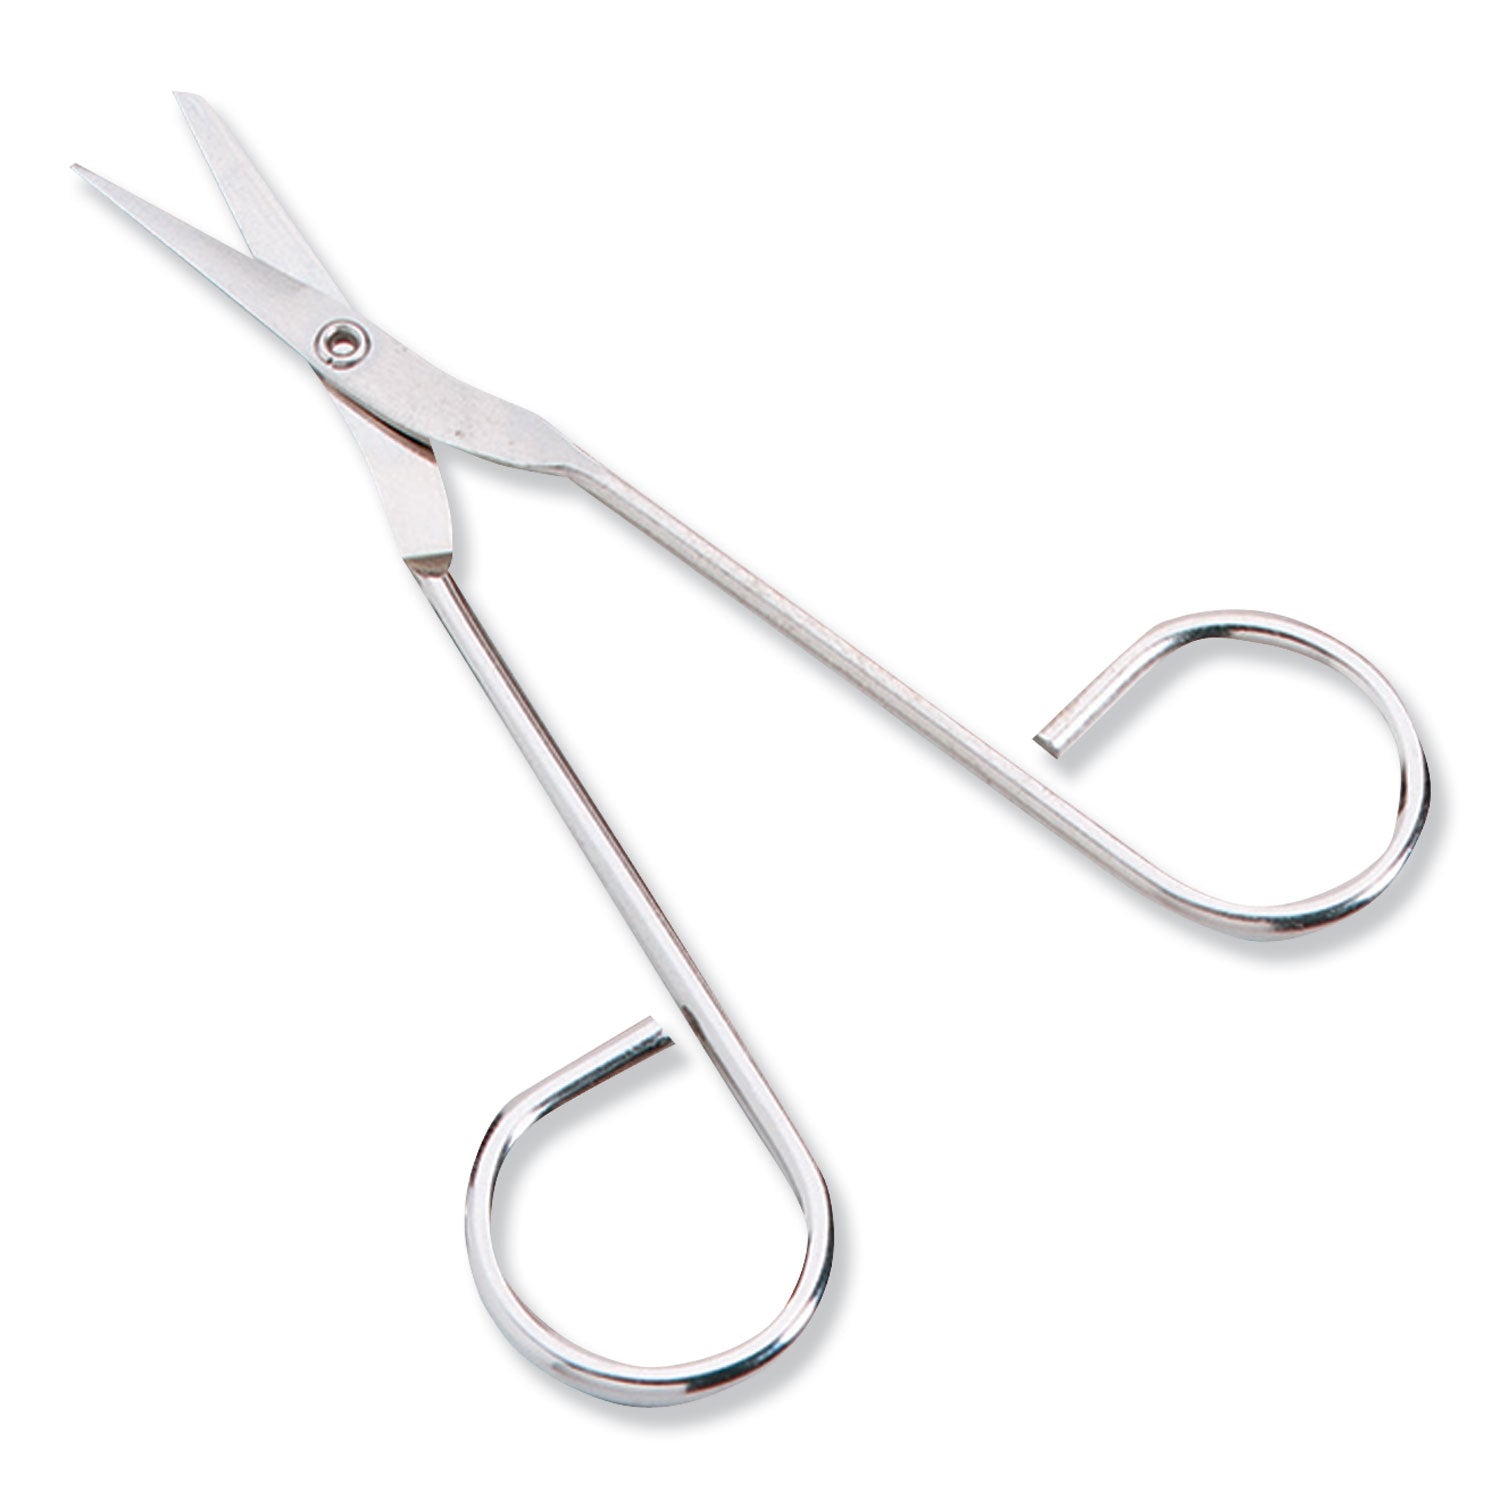 scissors-pointed-tip-45-long-nickel-straight-handle_faofae6004 - 2